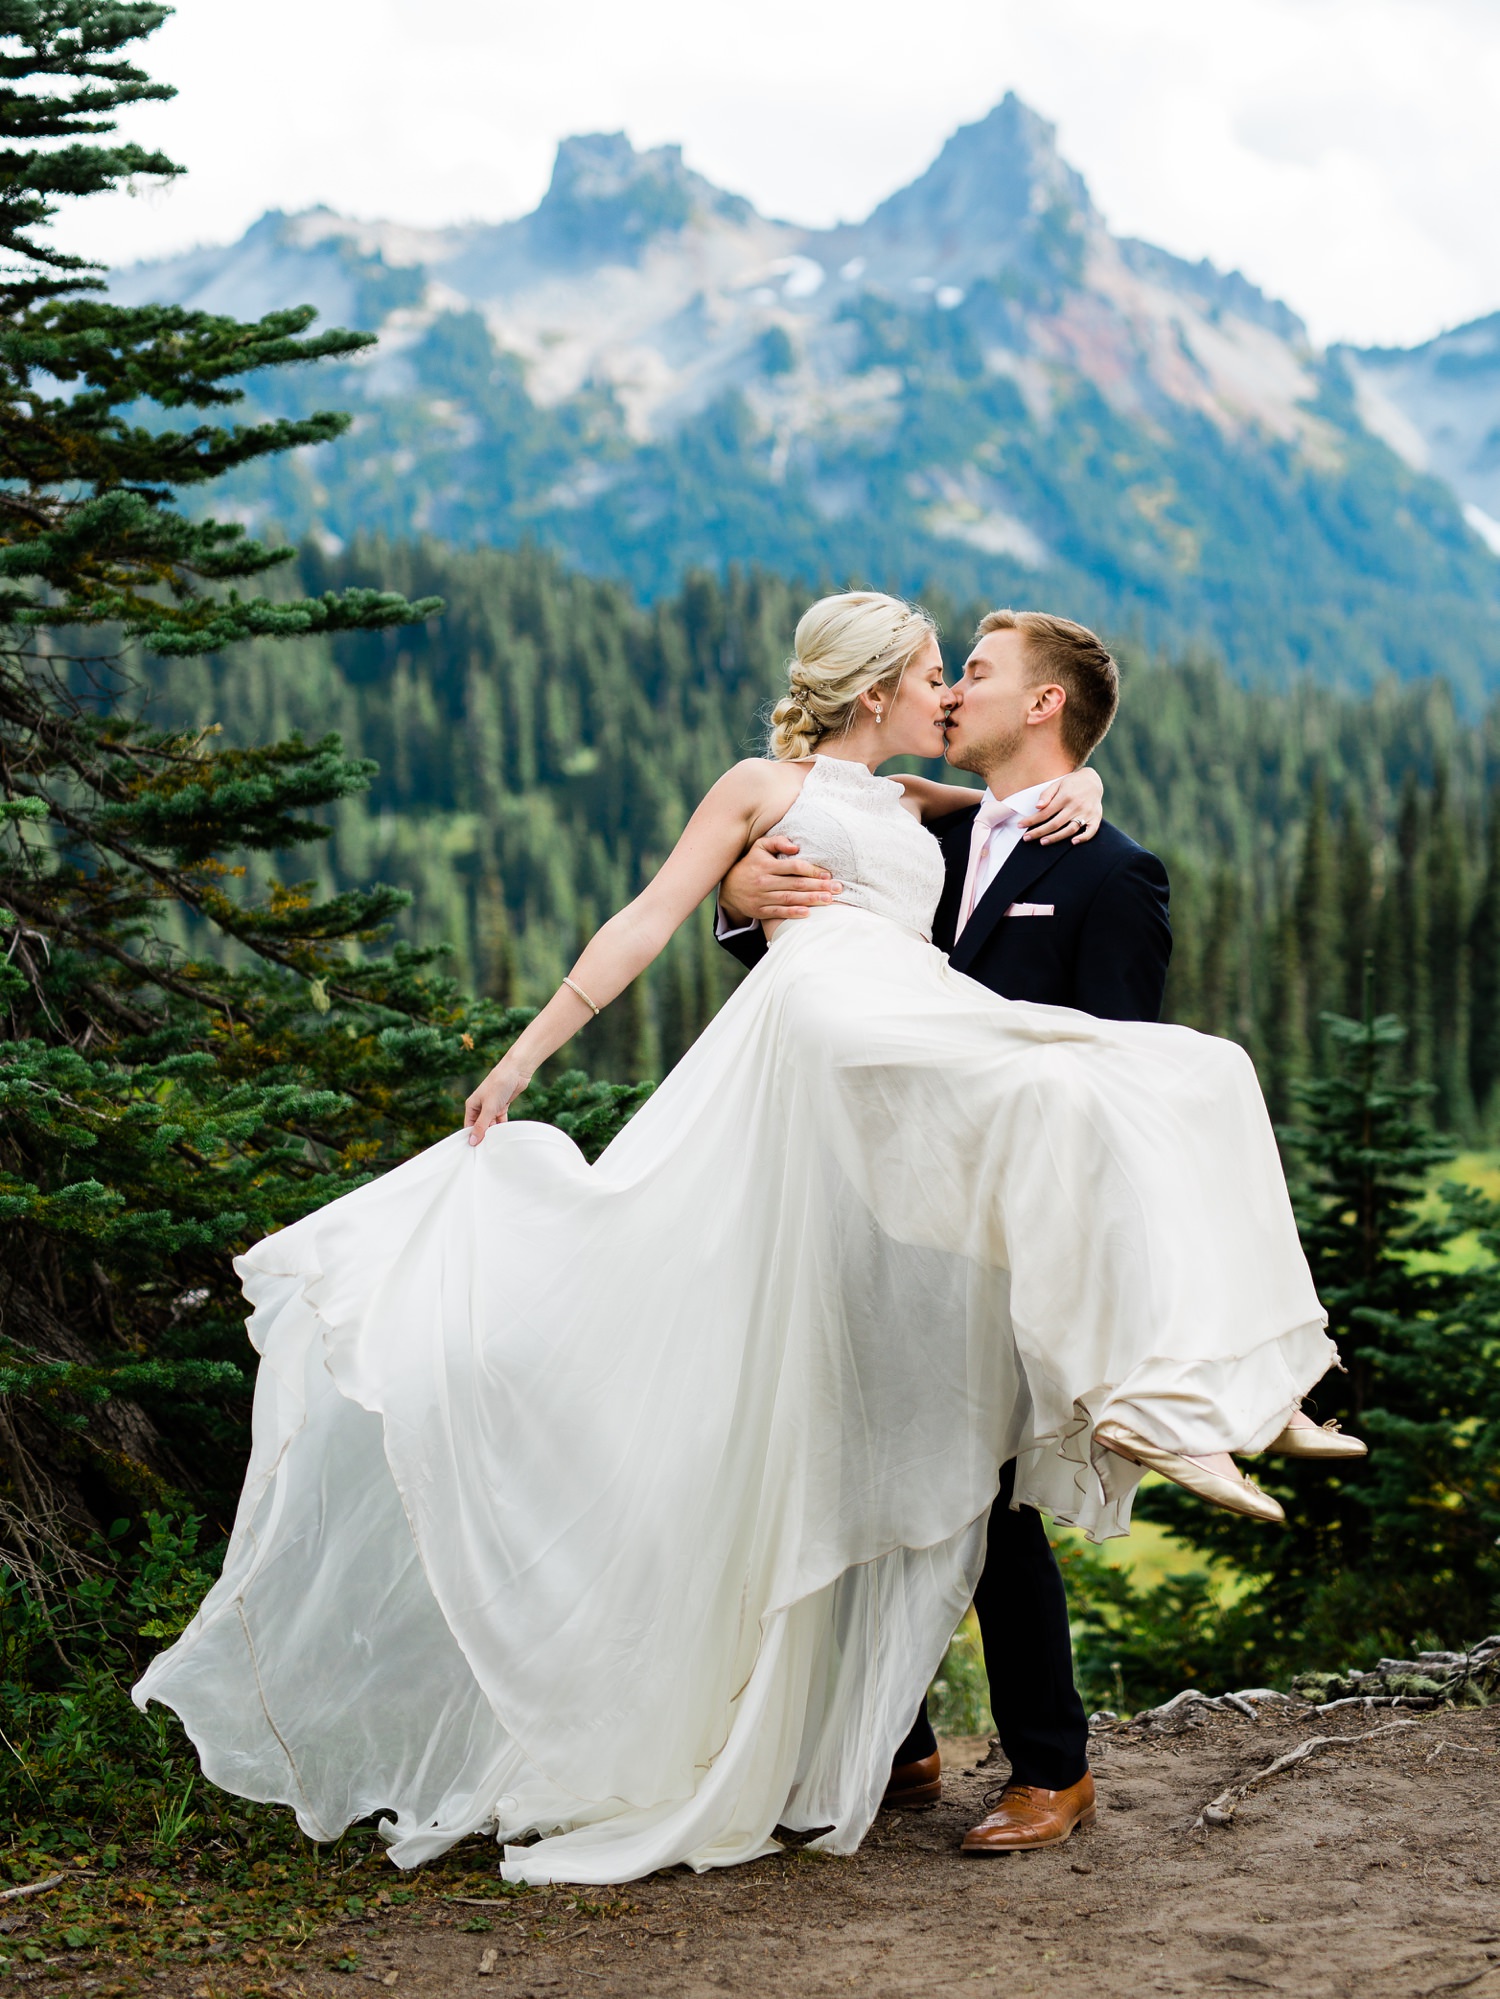 fun wedding photos at mount rainier national park